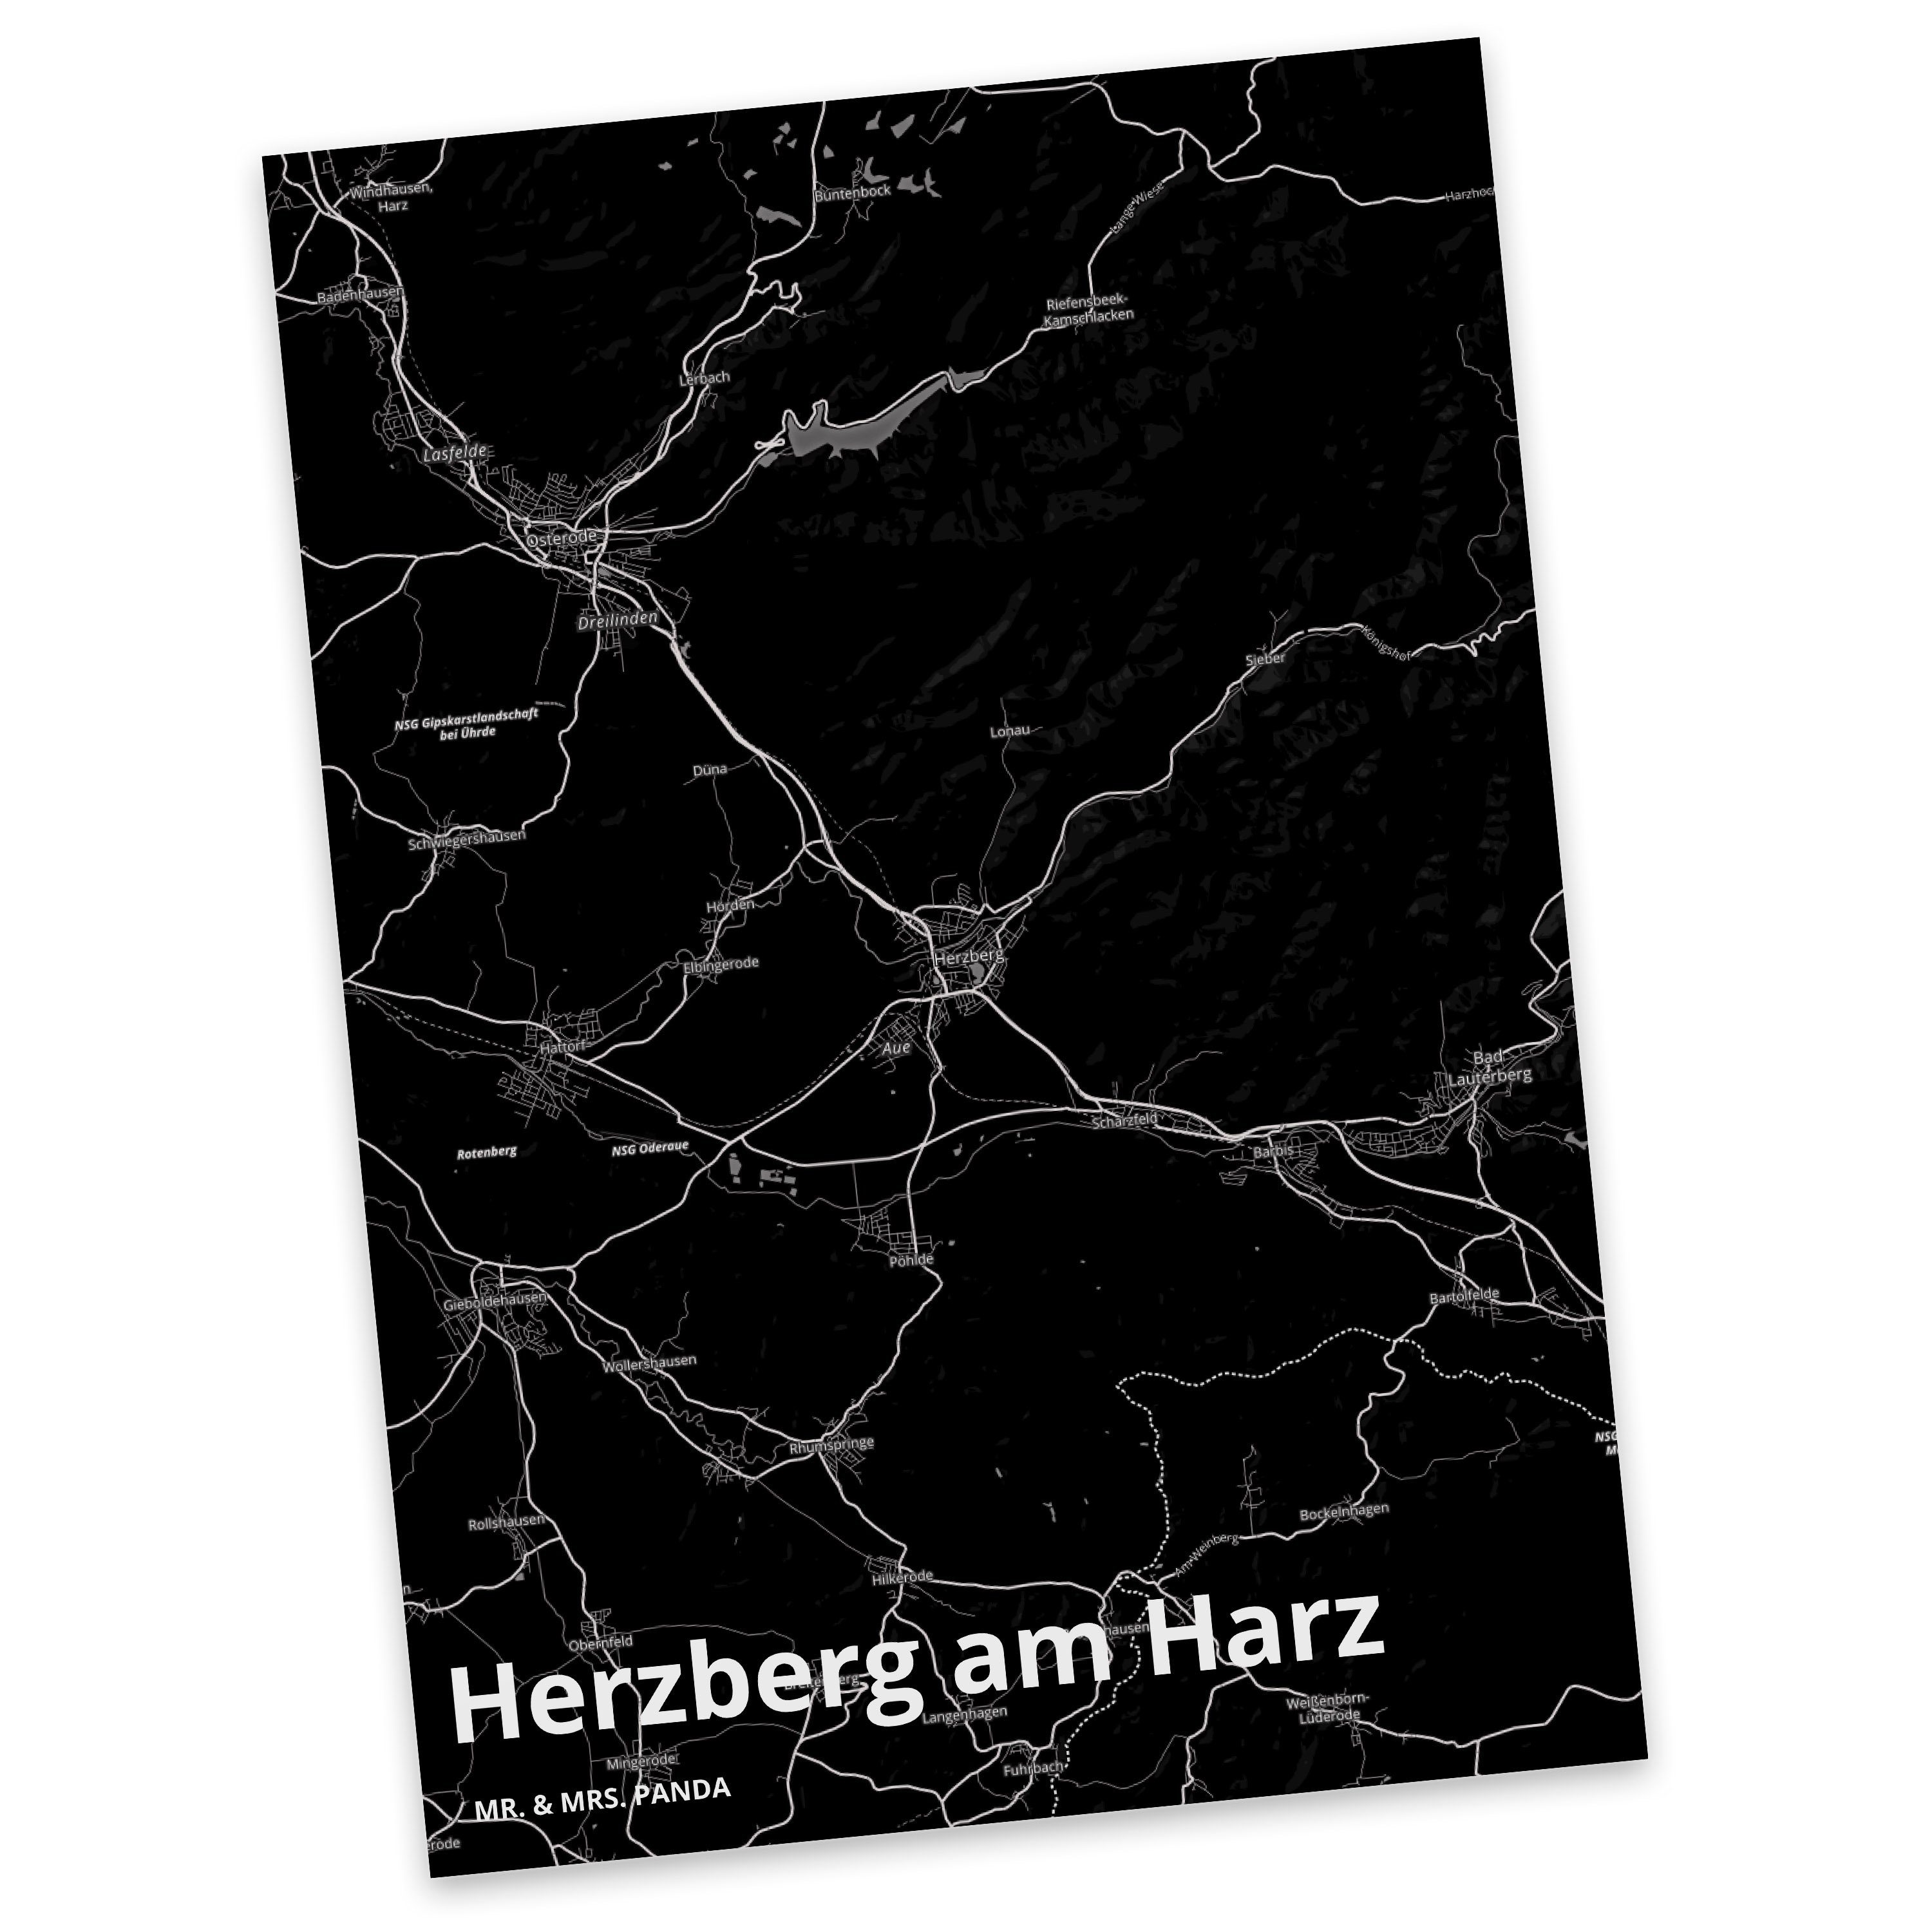 Mr. & St am Herzberg Dorf Mrs. Harz Karte, Panda Map Geschenk, Stadt - Postkarte Karte Landkarte